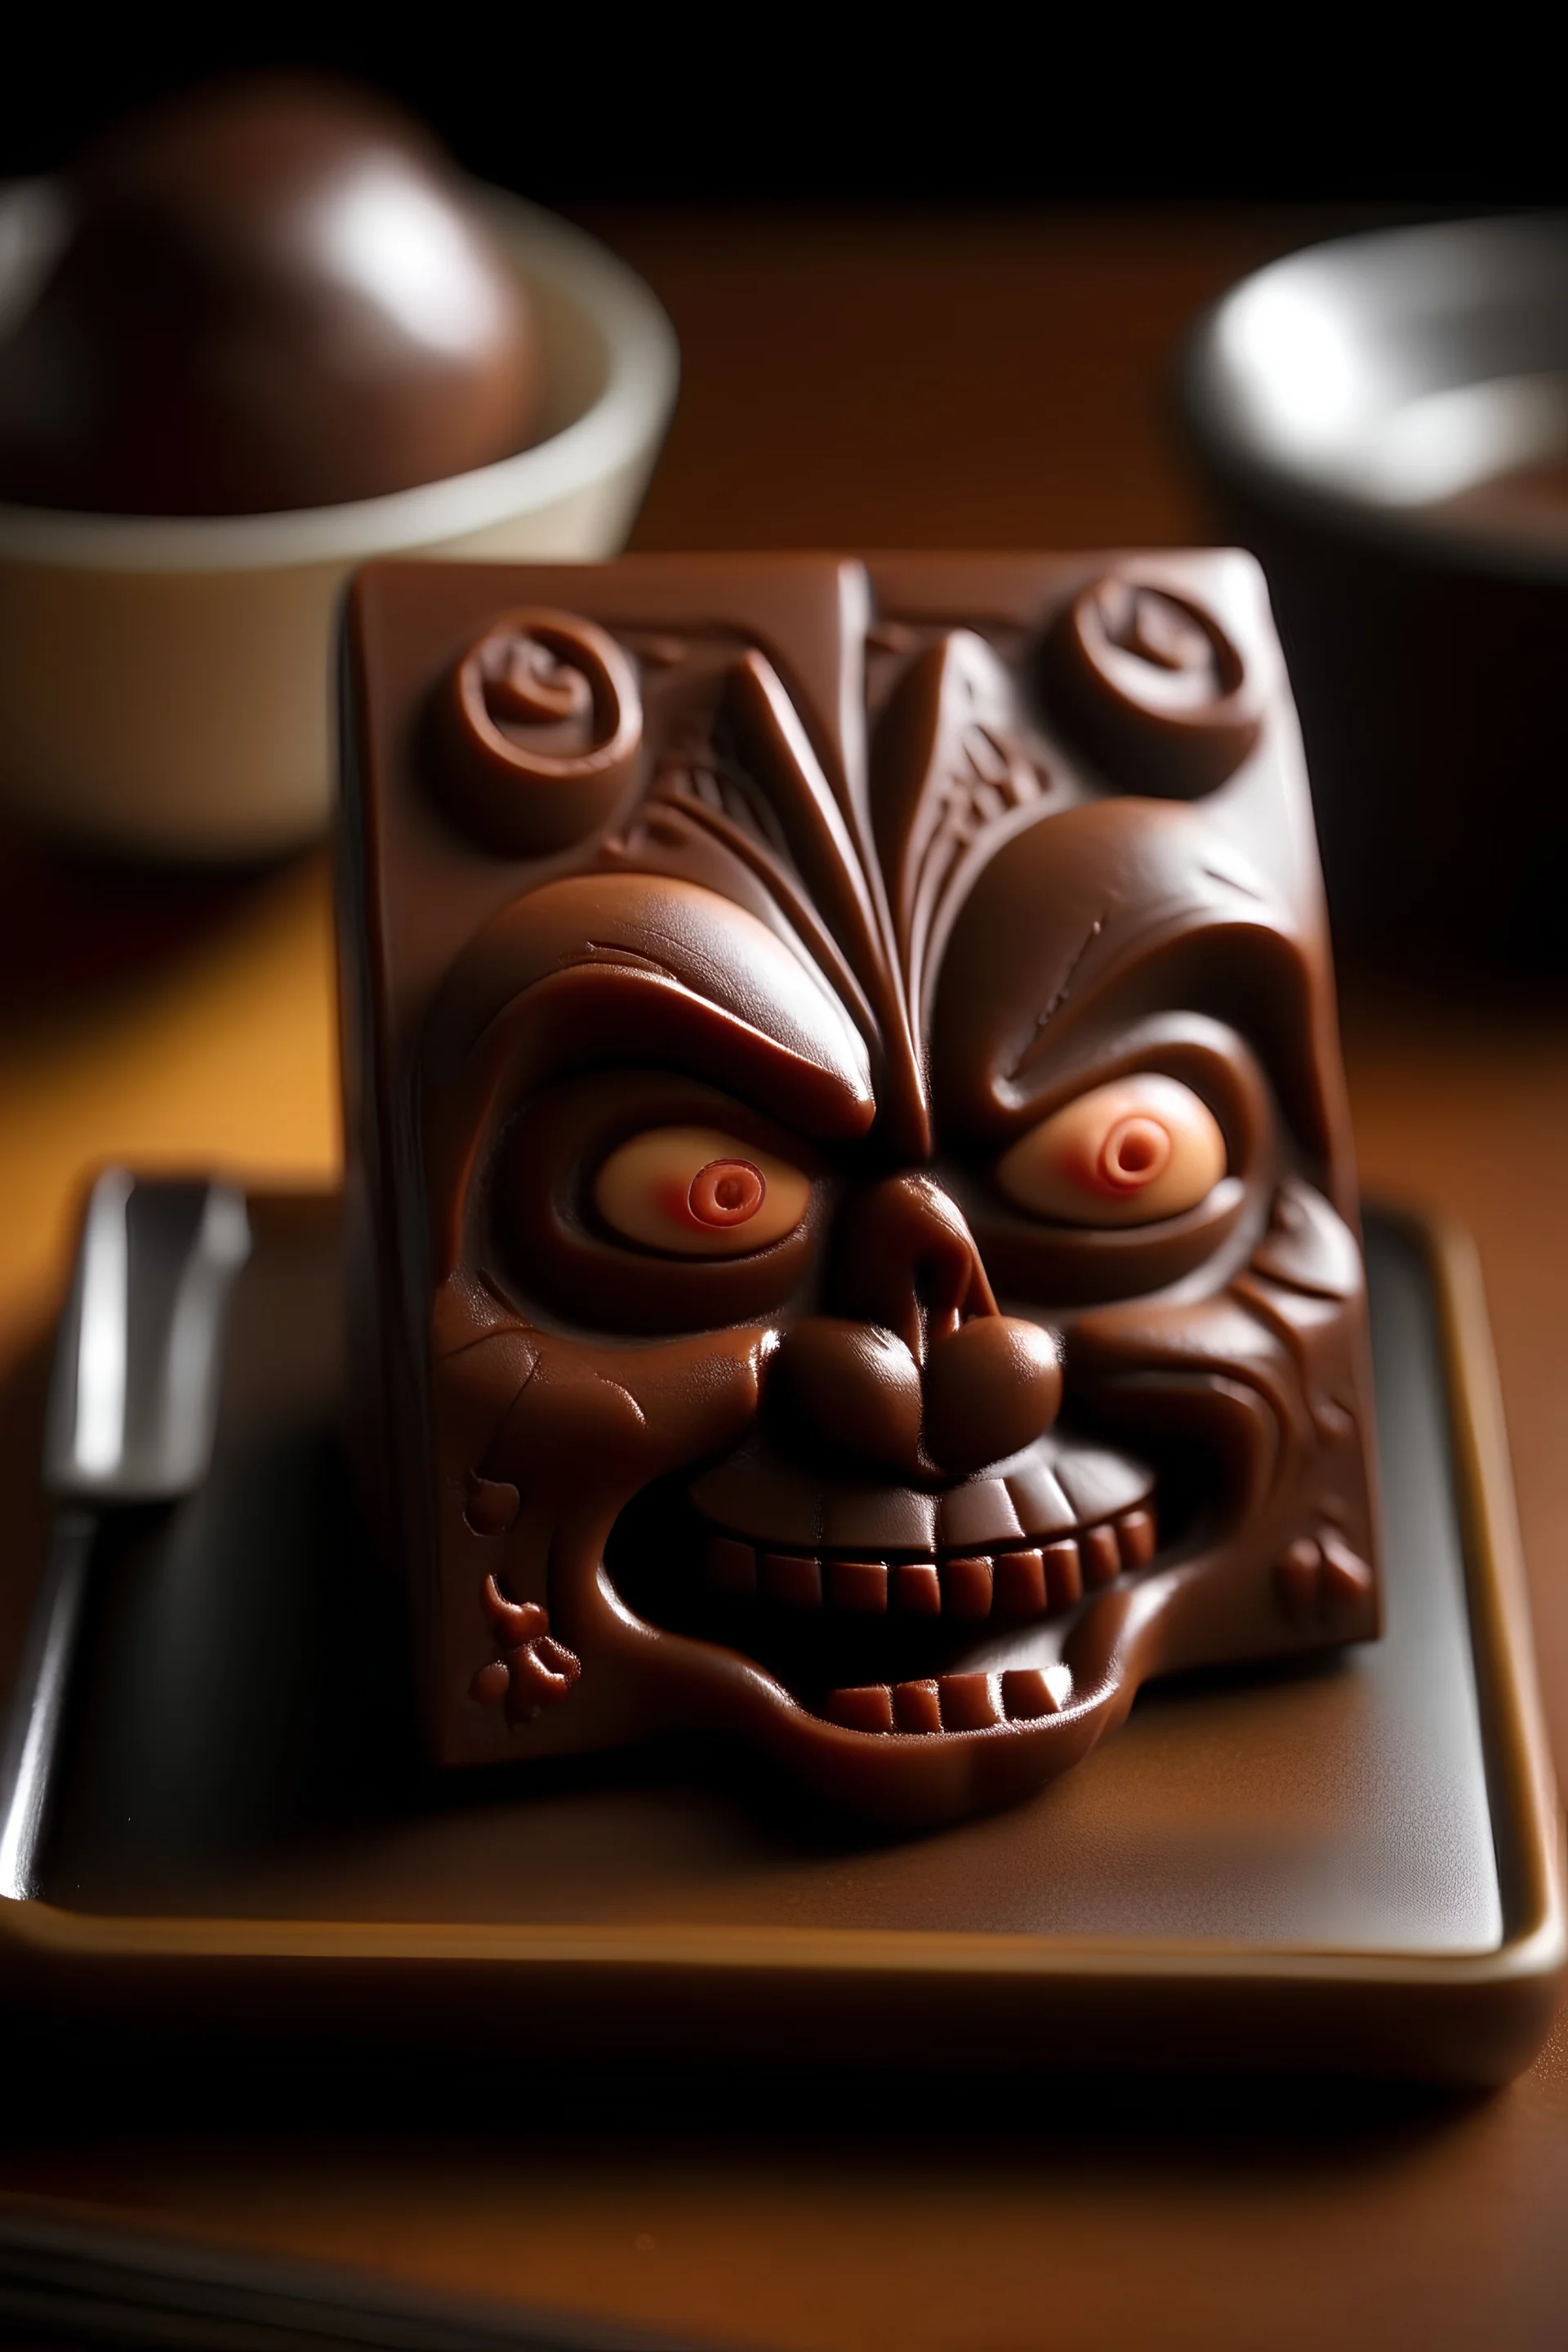 Make an evil chocolate